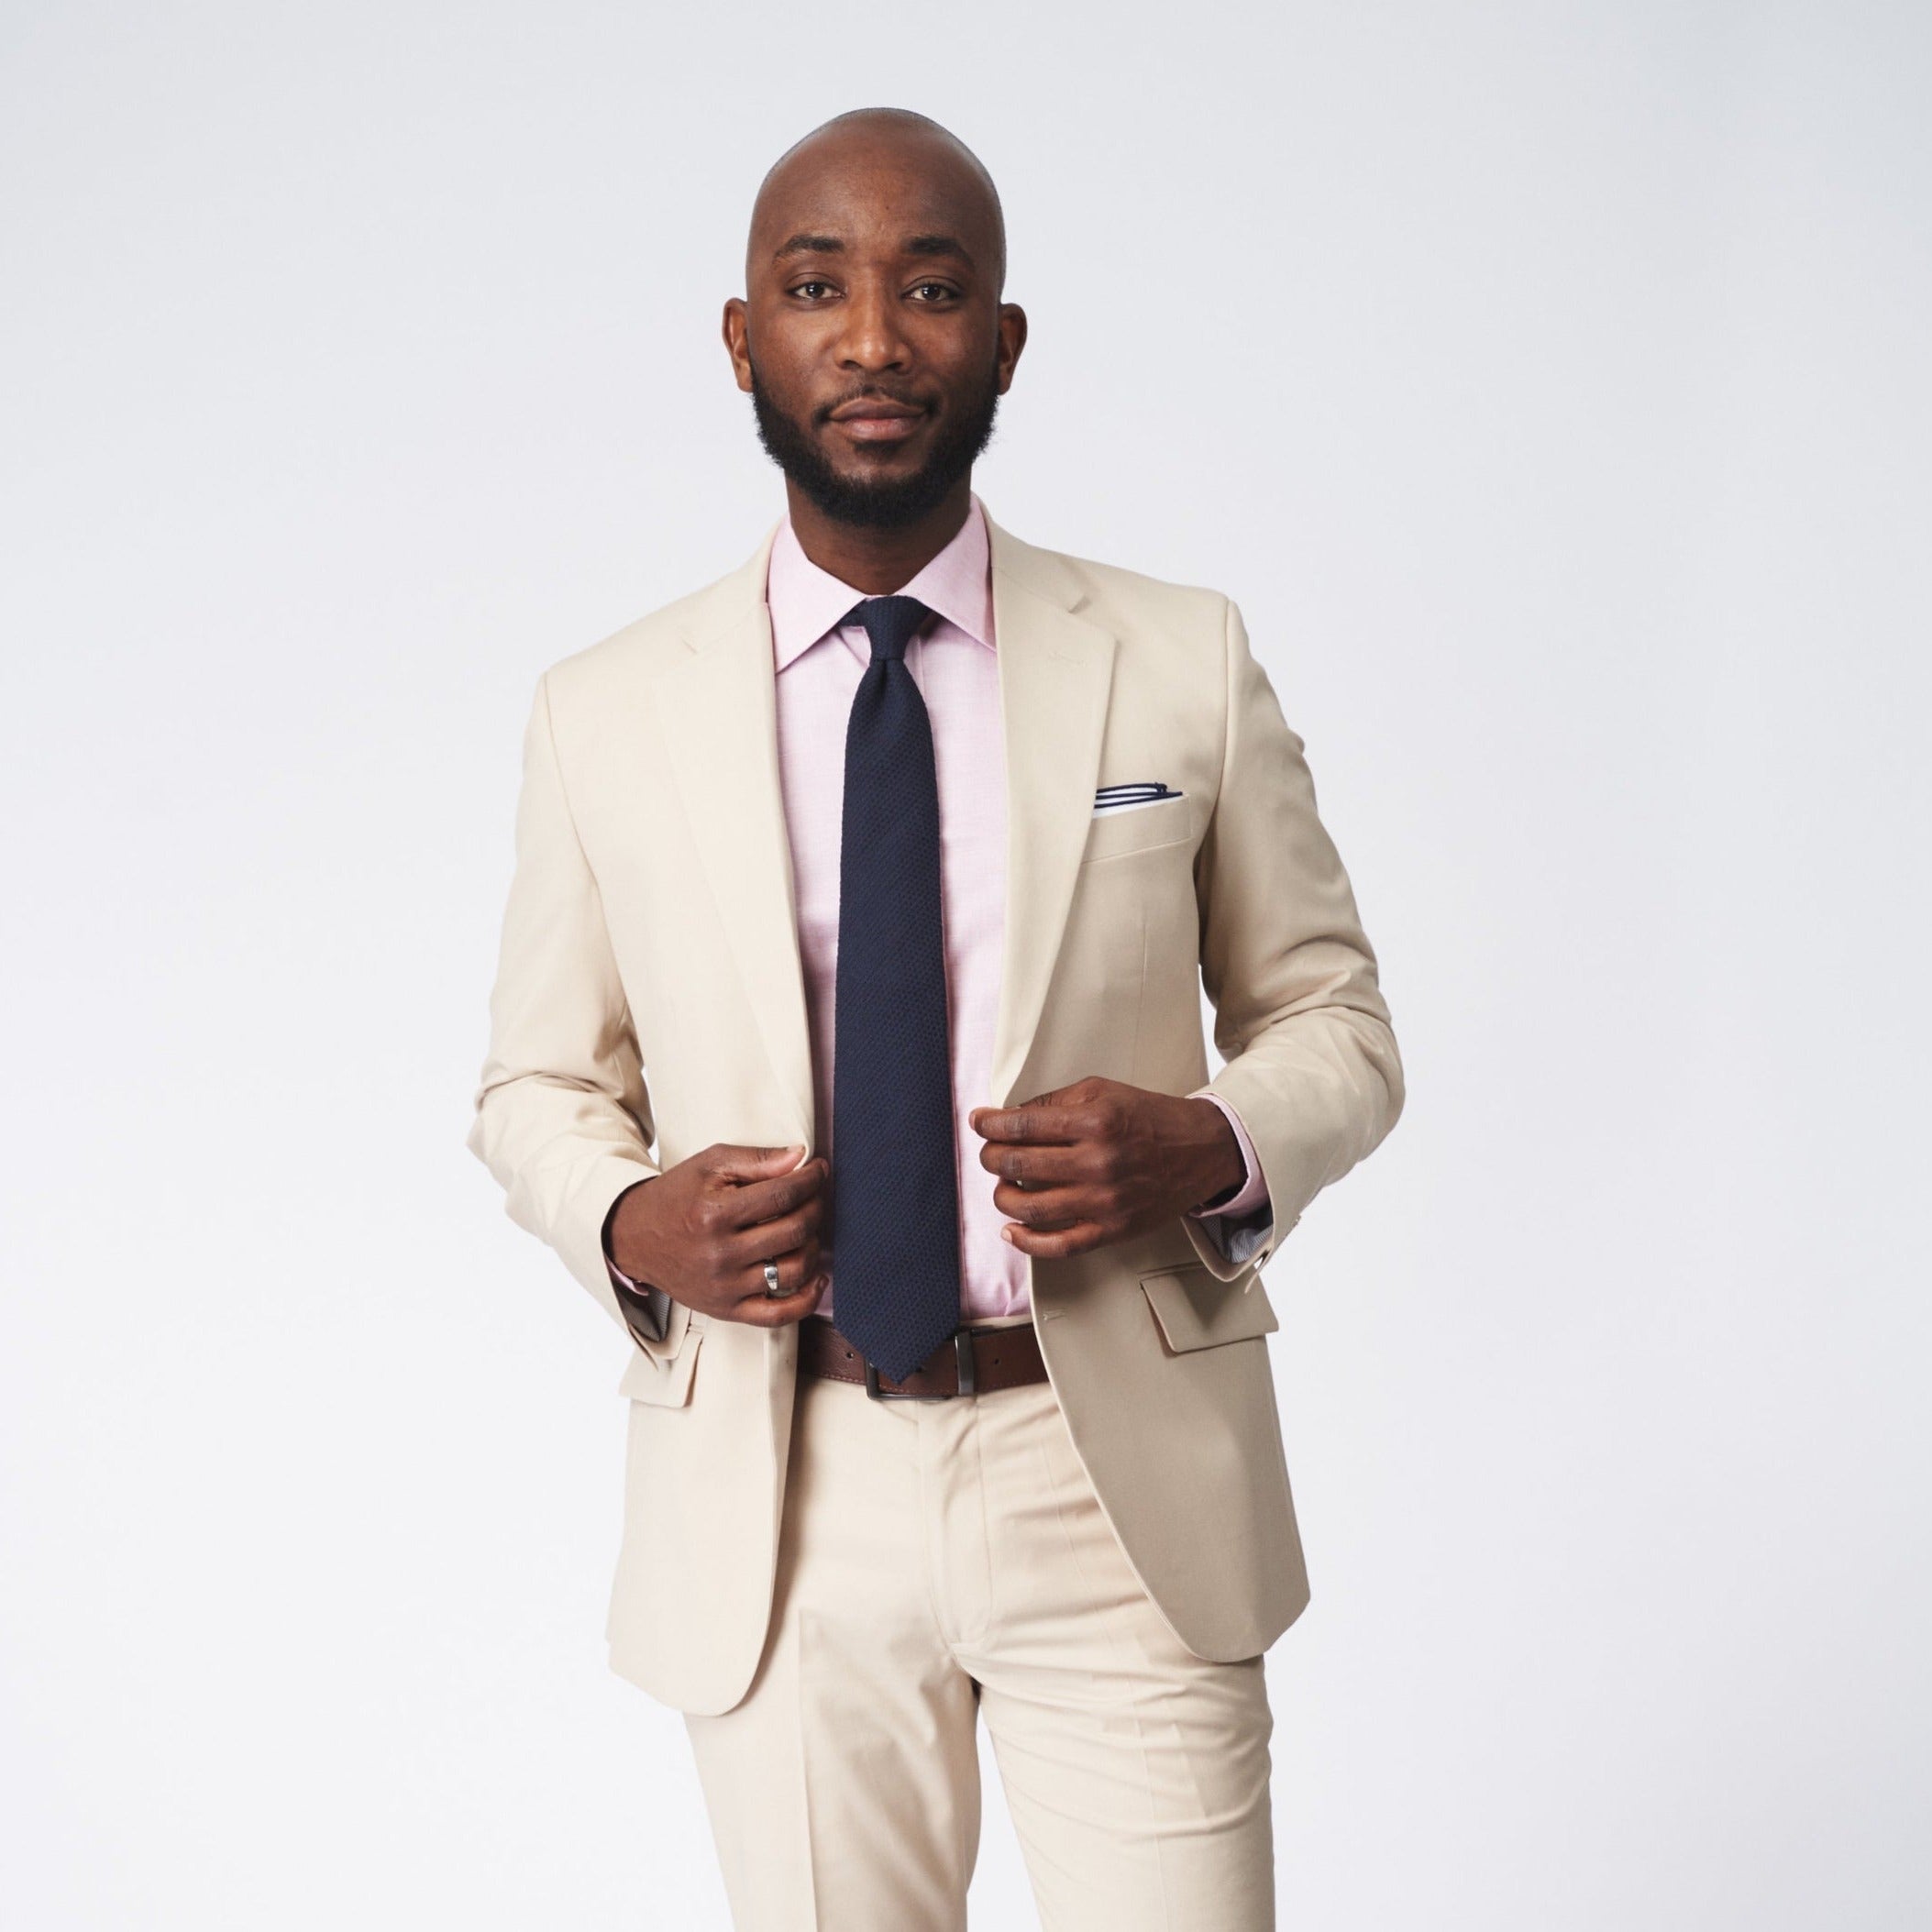 Buy Brown Suit Sets for Men by LOUIS PHILIPPE Online | Ajio.com